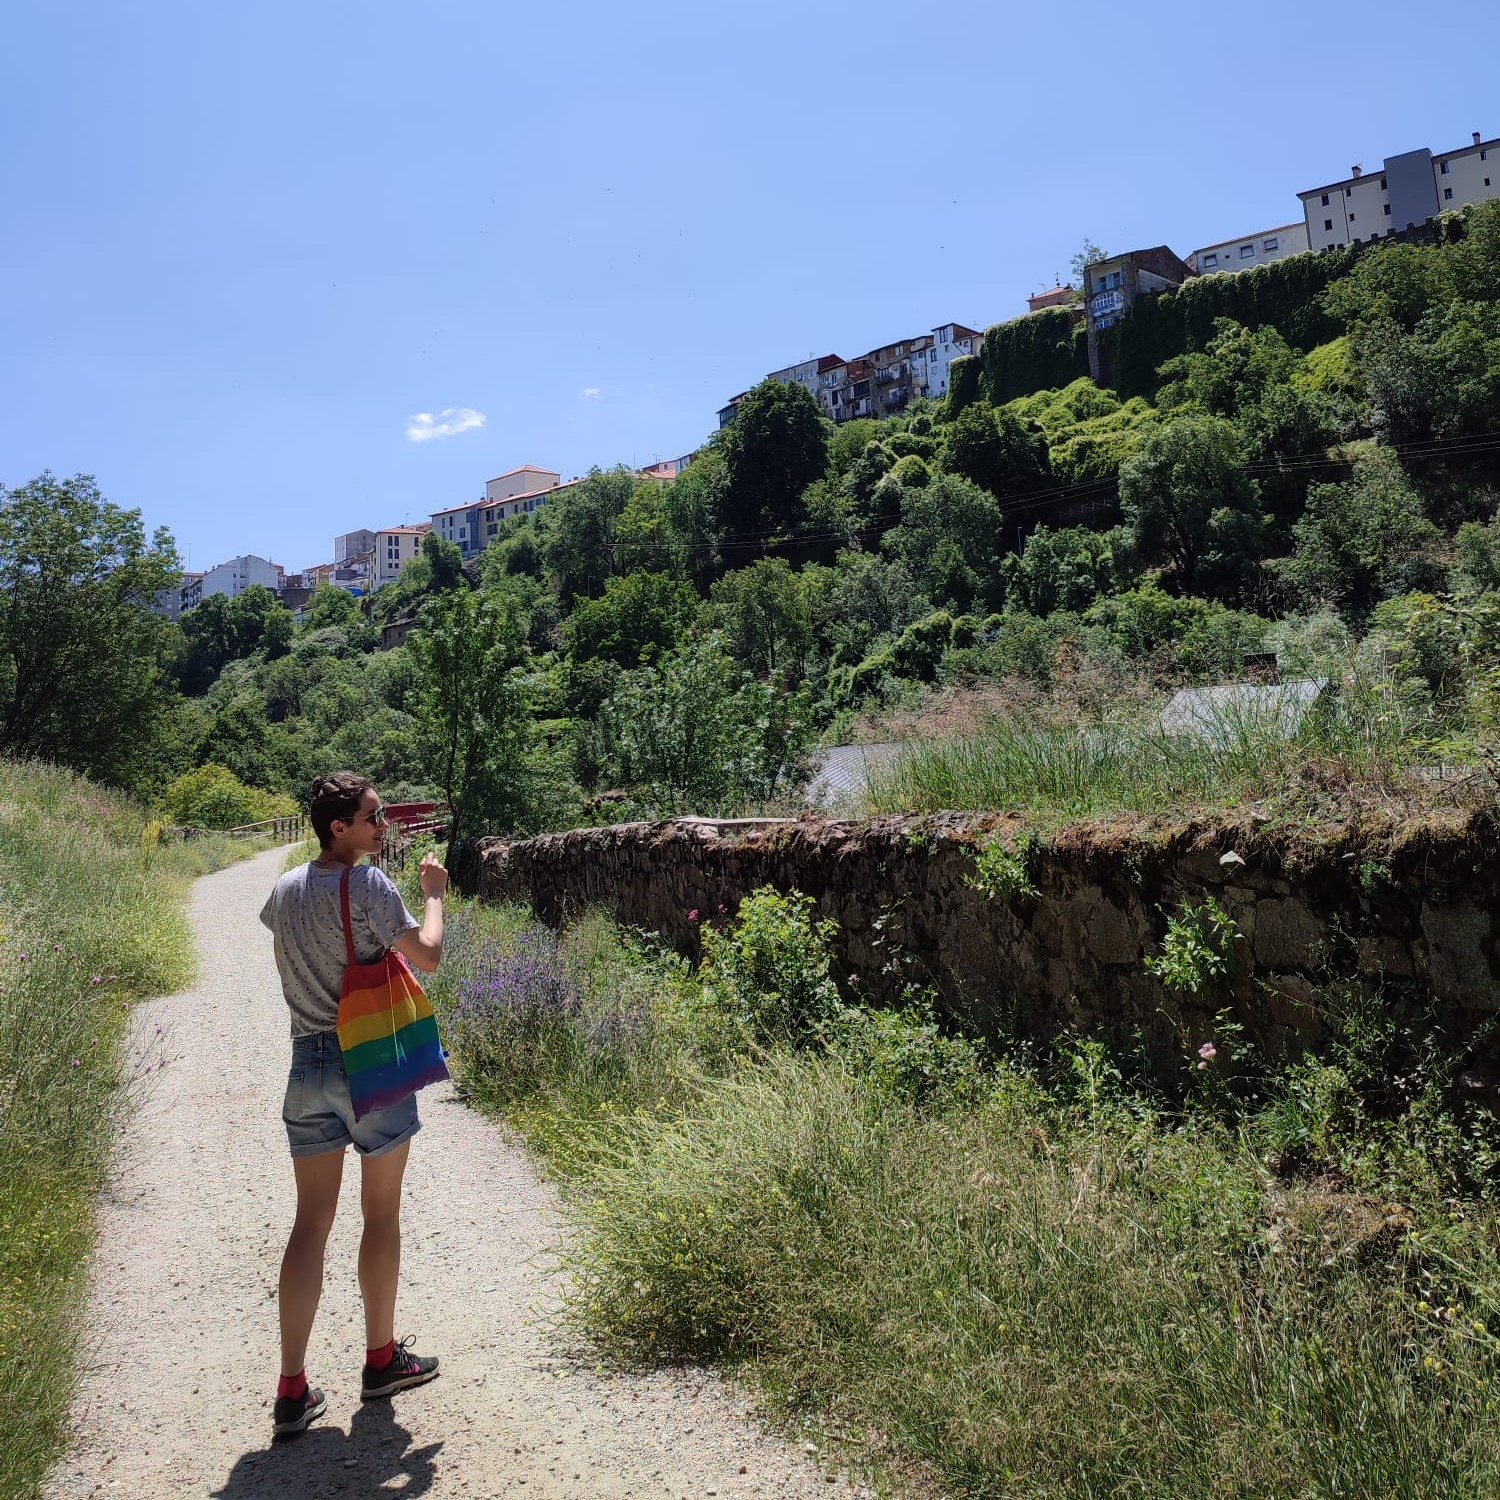 Me walking around Béjar, the place where I grew up